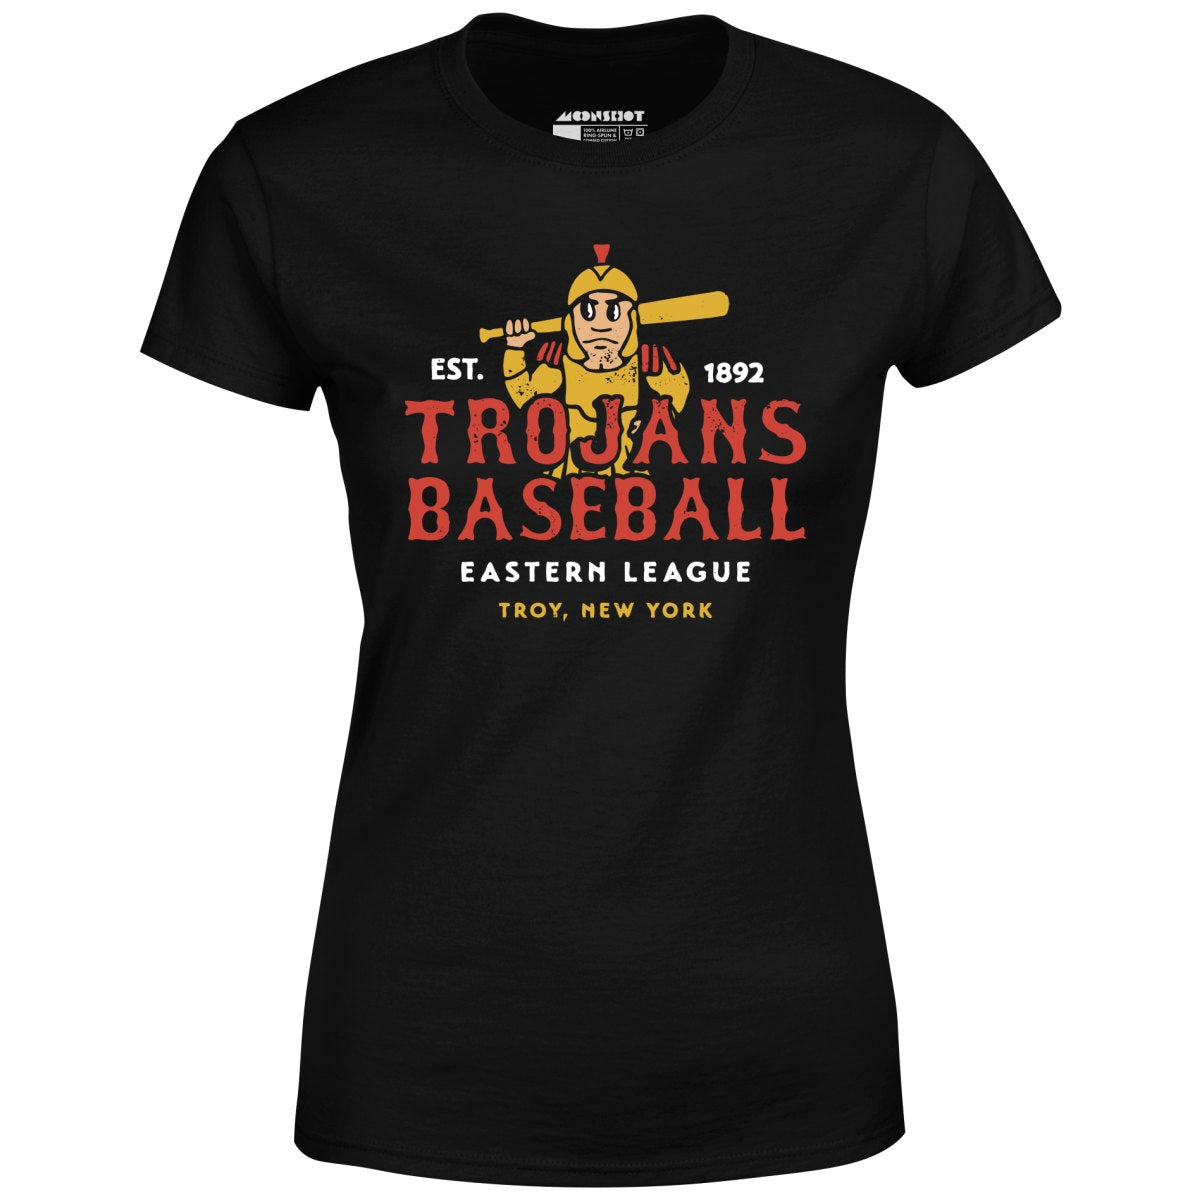 Troy Trojans - New York - Vintage Defunct Baseball Teams - Women's T-Shirt